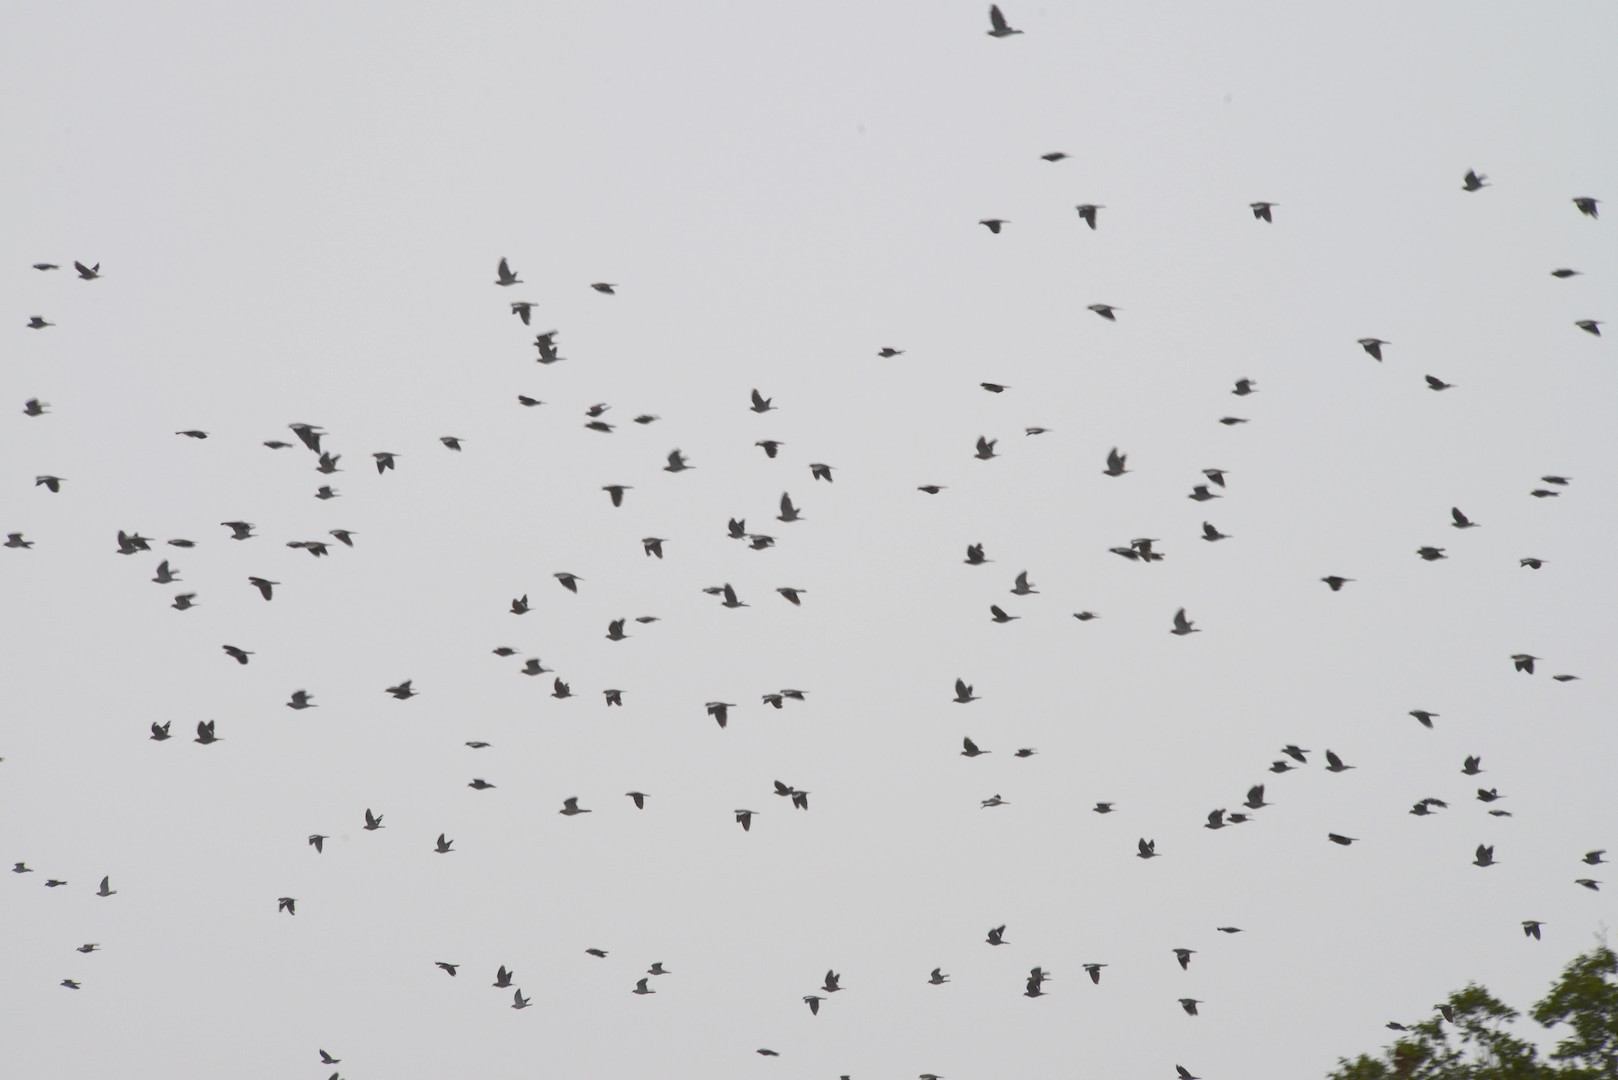 A flock of birds flies over Joint Base San Antonio-Randolph Sept. 19, 2014. Bird strikes on aircraft are a serious safety hazard. (U.S. Air Force photo by Joel Martinez)